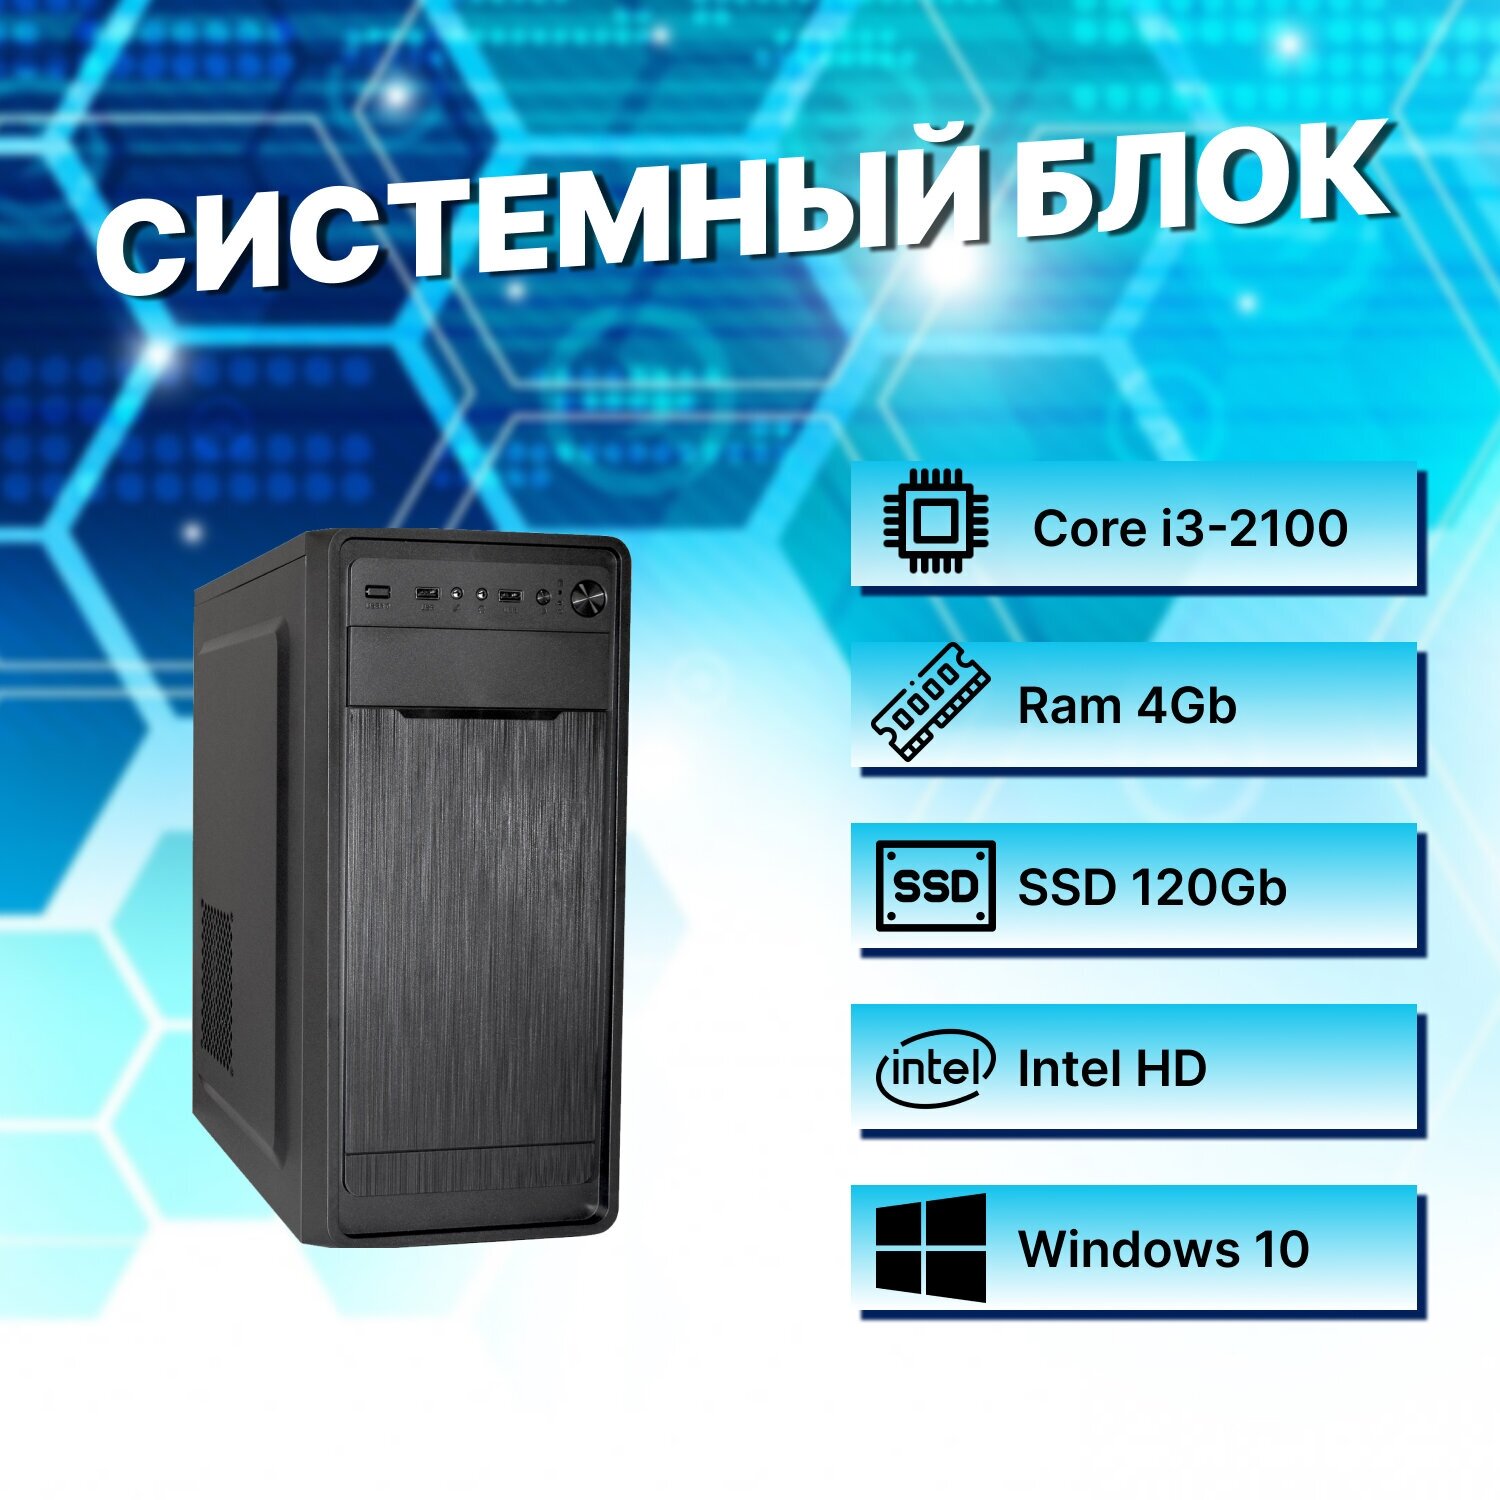 Системный блок Intel Core i3-2100 (3.1ГГц)/ RAM 4Gb/ SSD 120Gb/ Intel HD Graphics 2000/ Windows 10 Pro